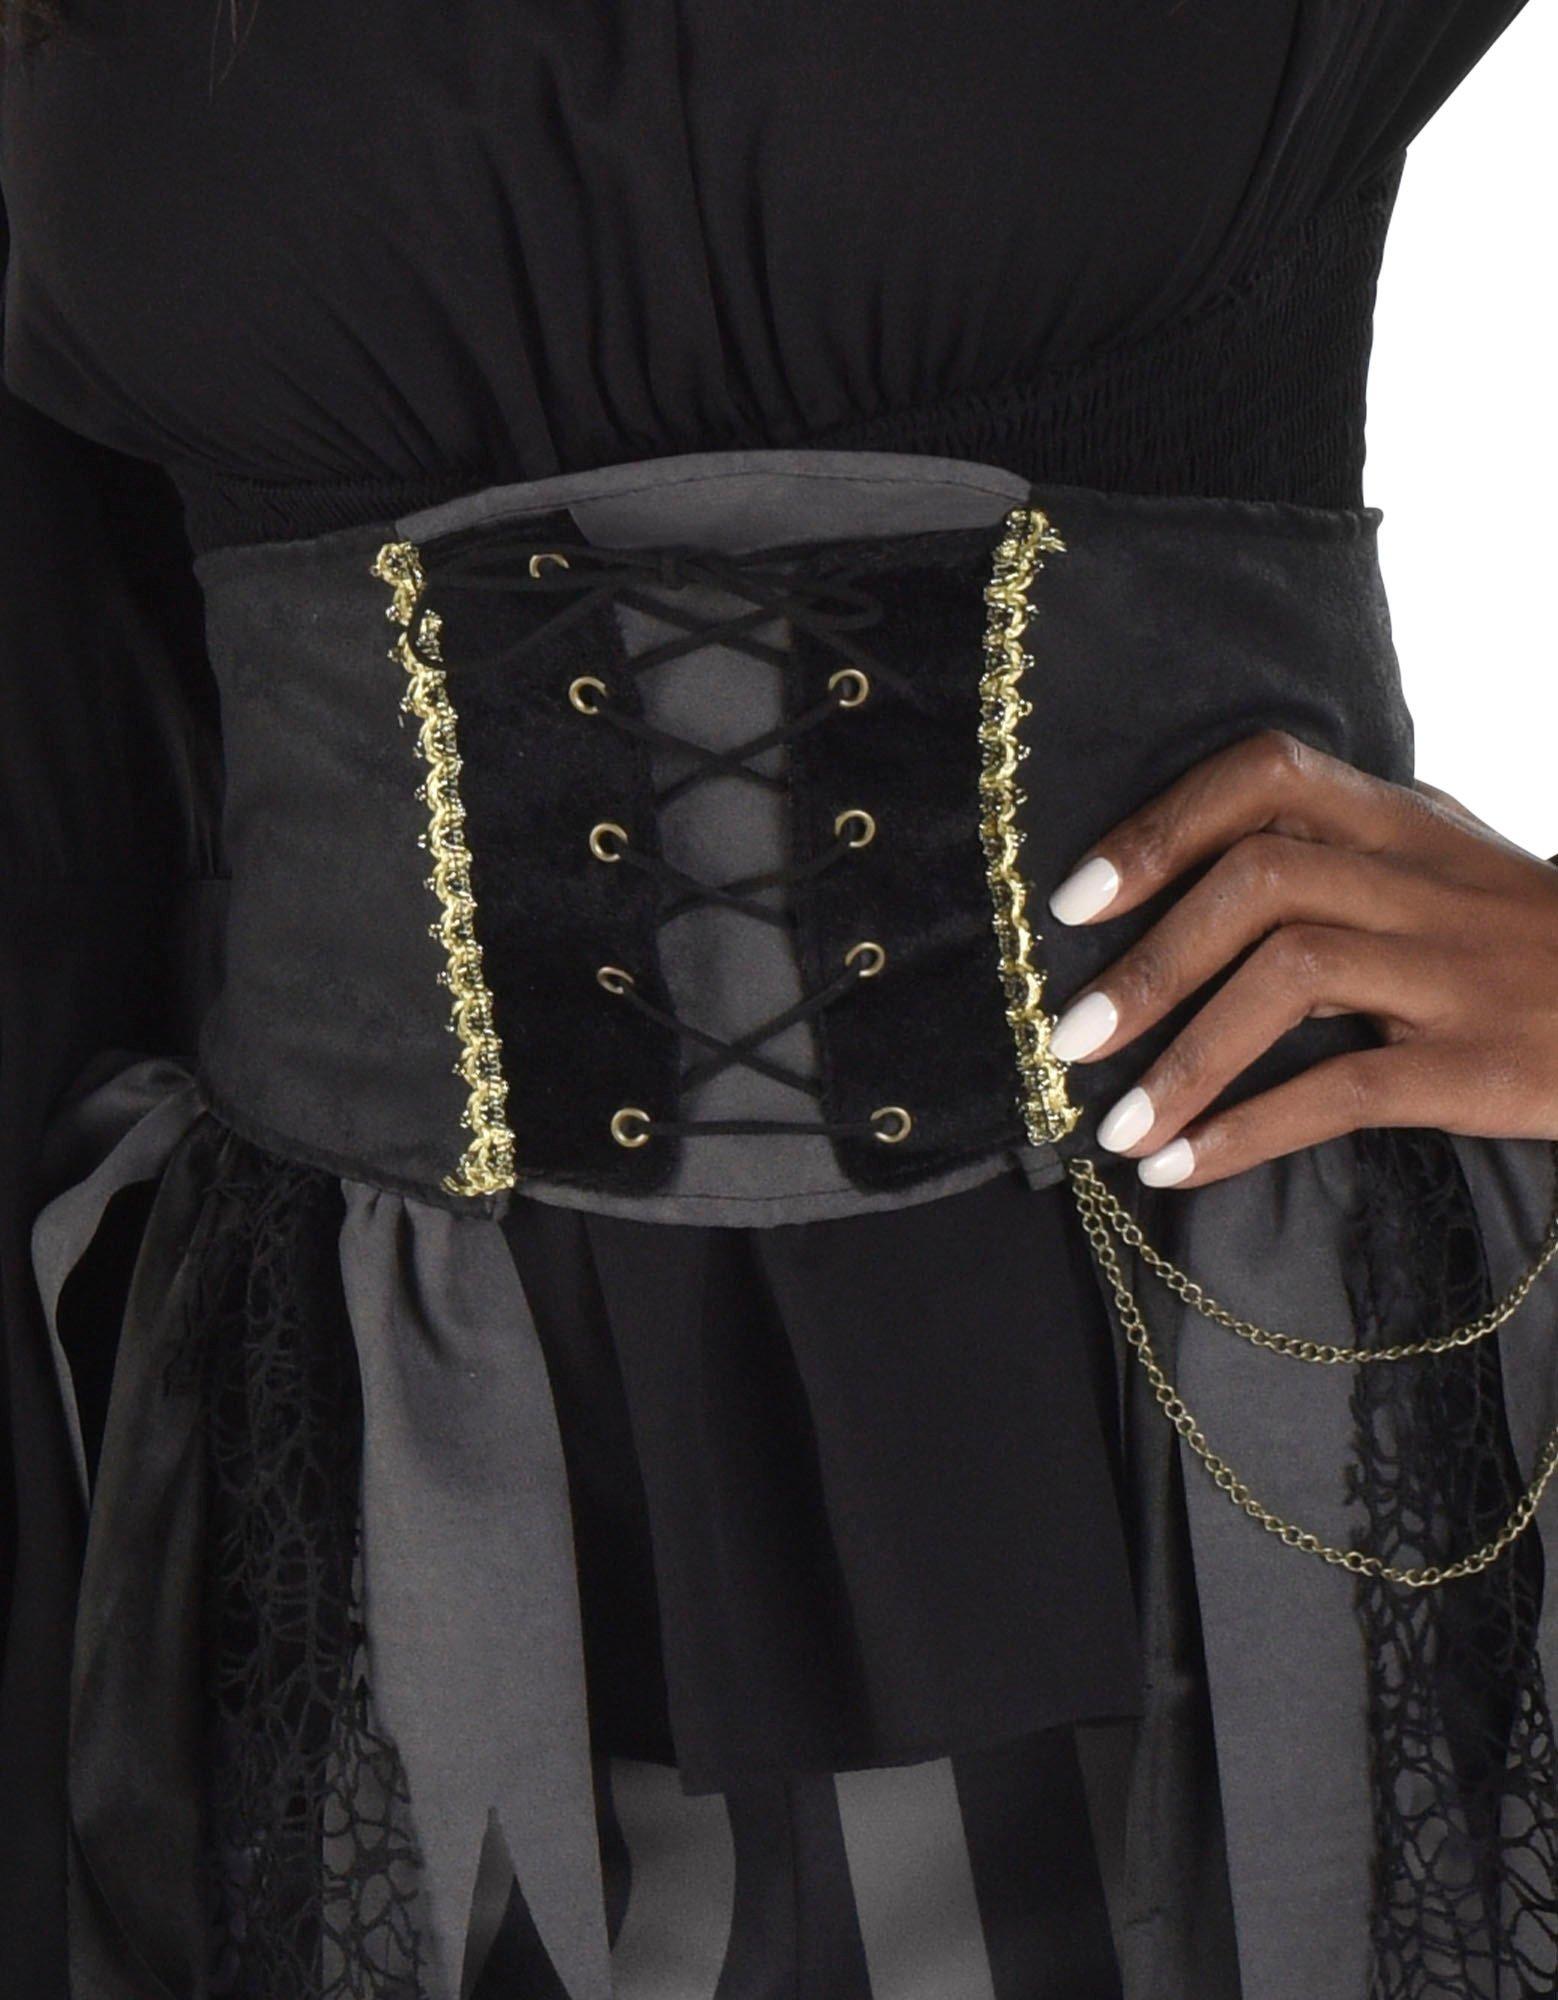 Leather Waist Cincher - Pirate Fashions